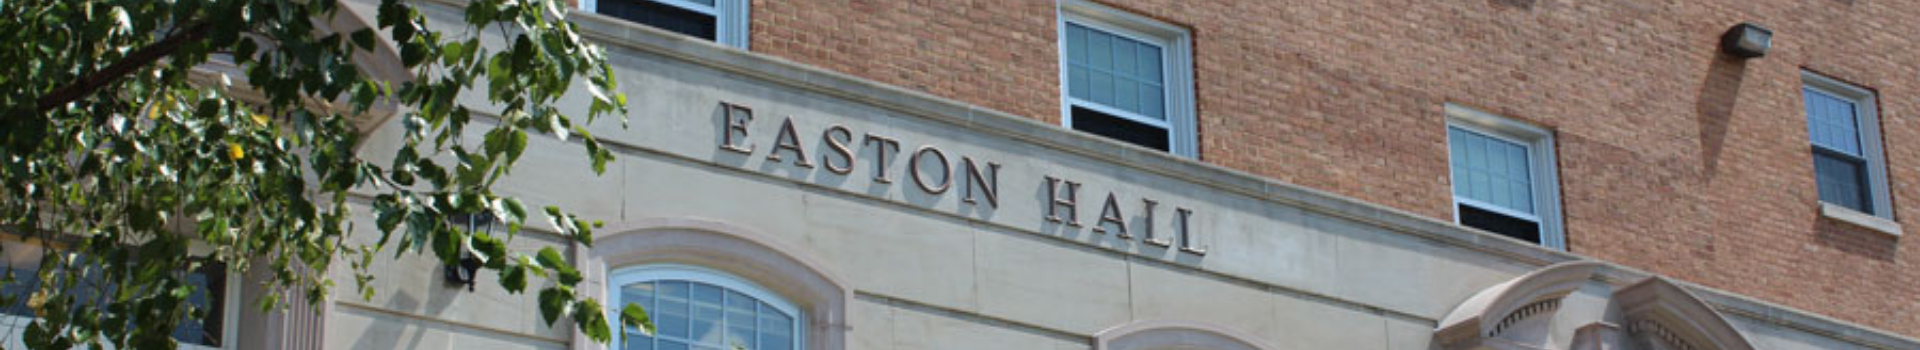 exterior of Easton Hall